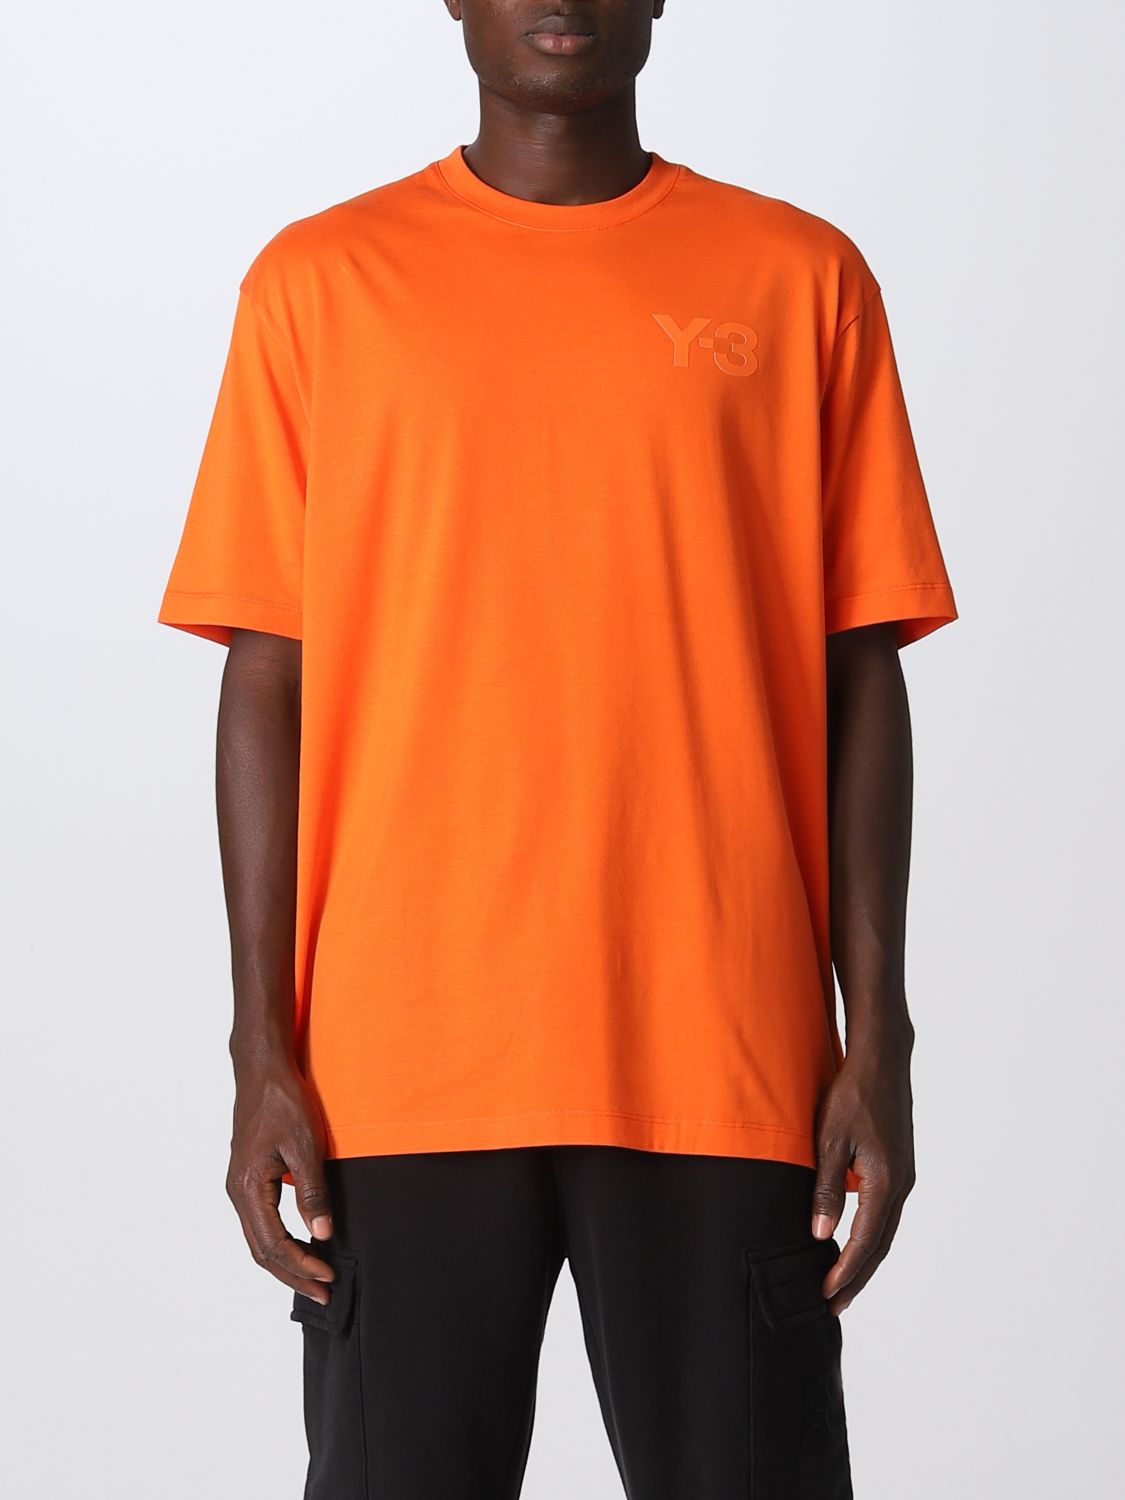 Y-3: t-shirt for man - Orange | Y-3 t-shirt HT2287 online on GIGLIO.COM